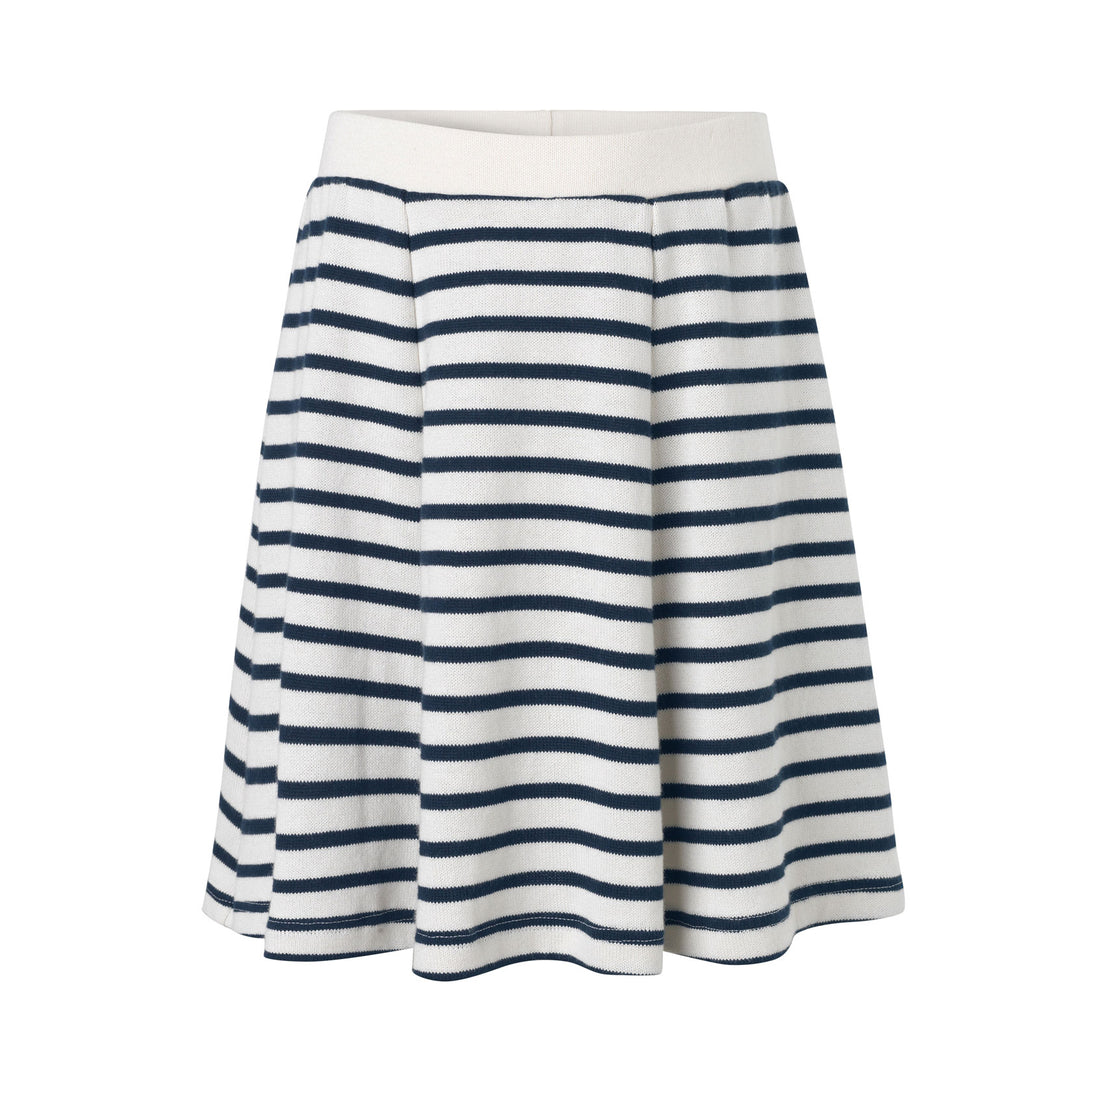 Mads Norgaard Navy Stripe Flair Skirt